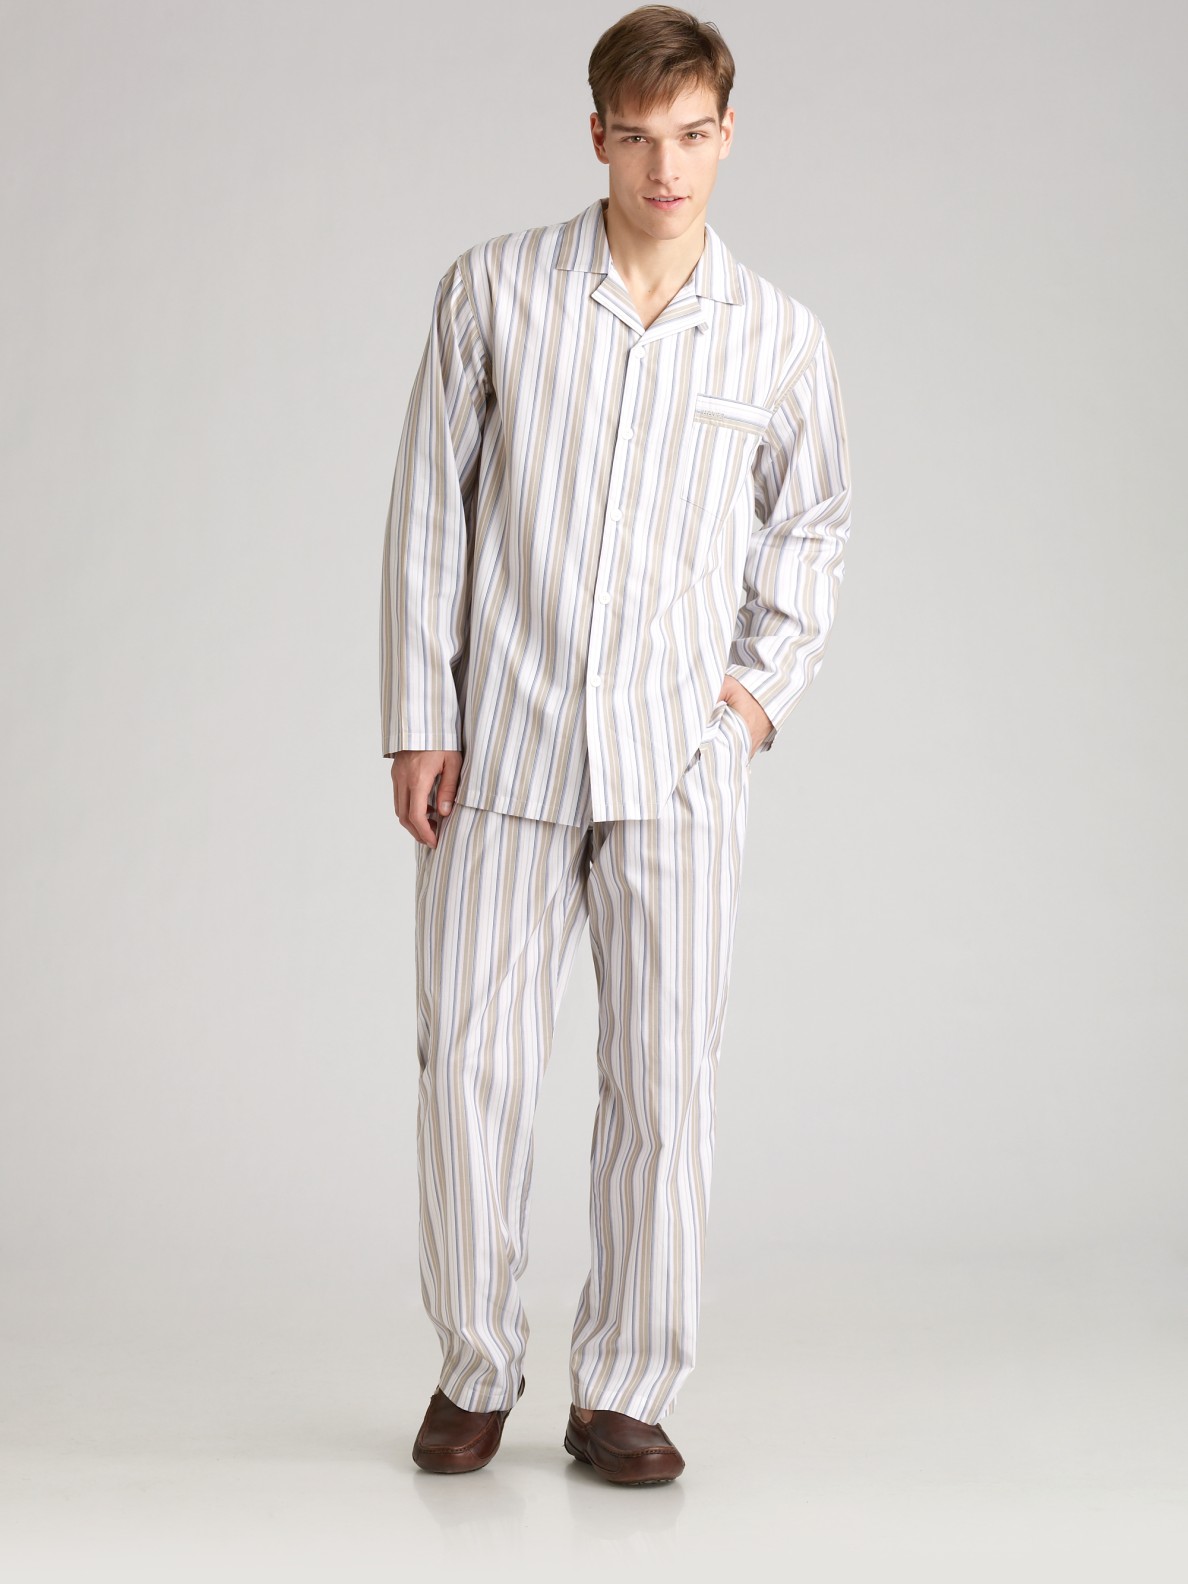 Lyst - Hanro Striped Pajamas Set in Pink for Men